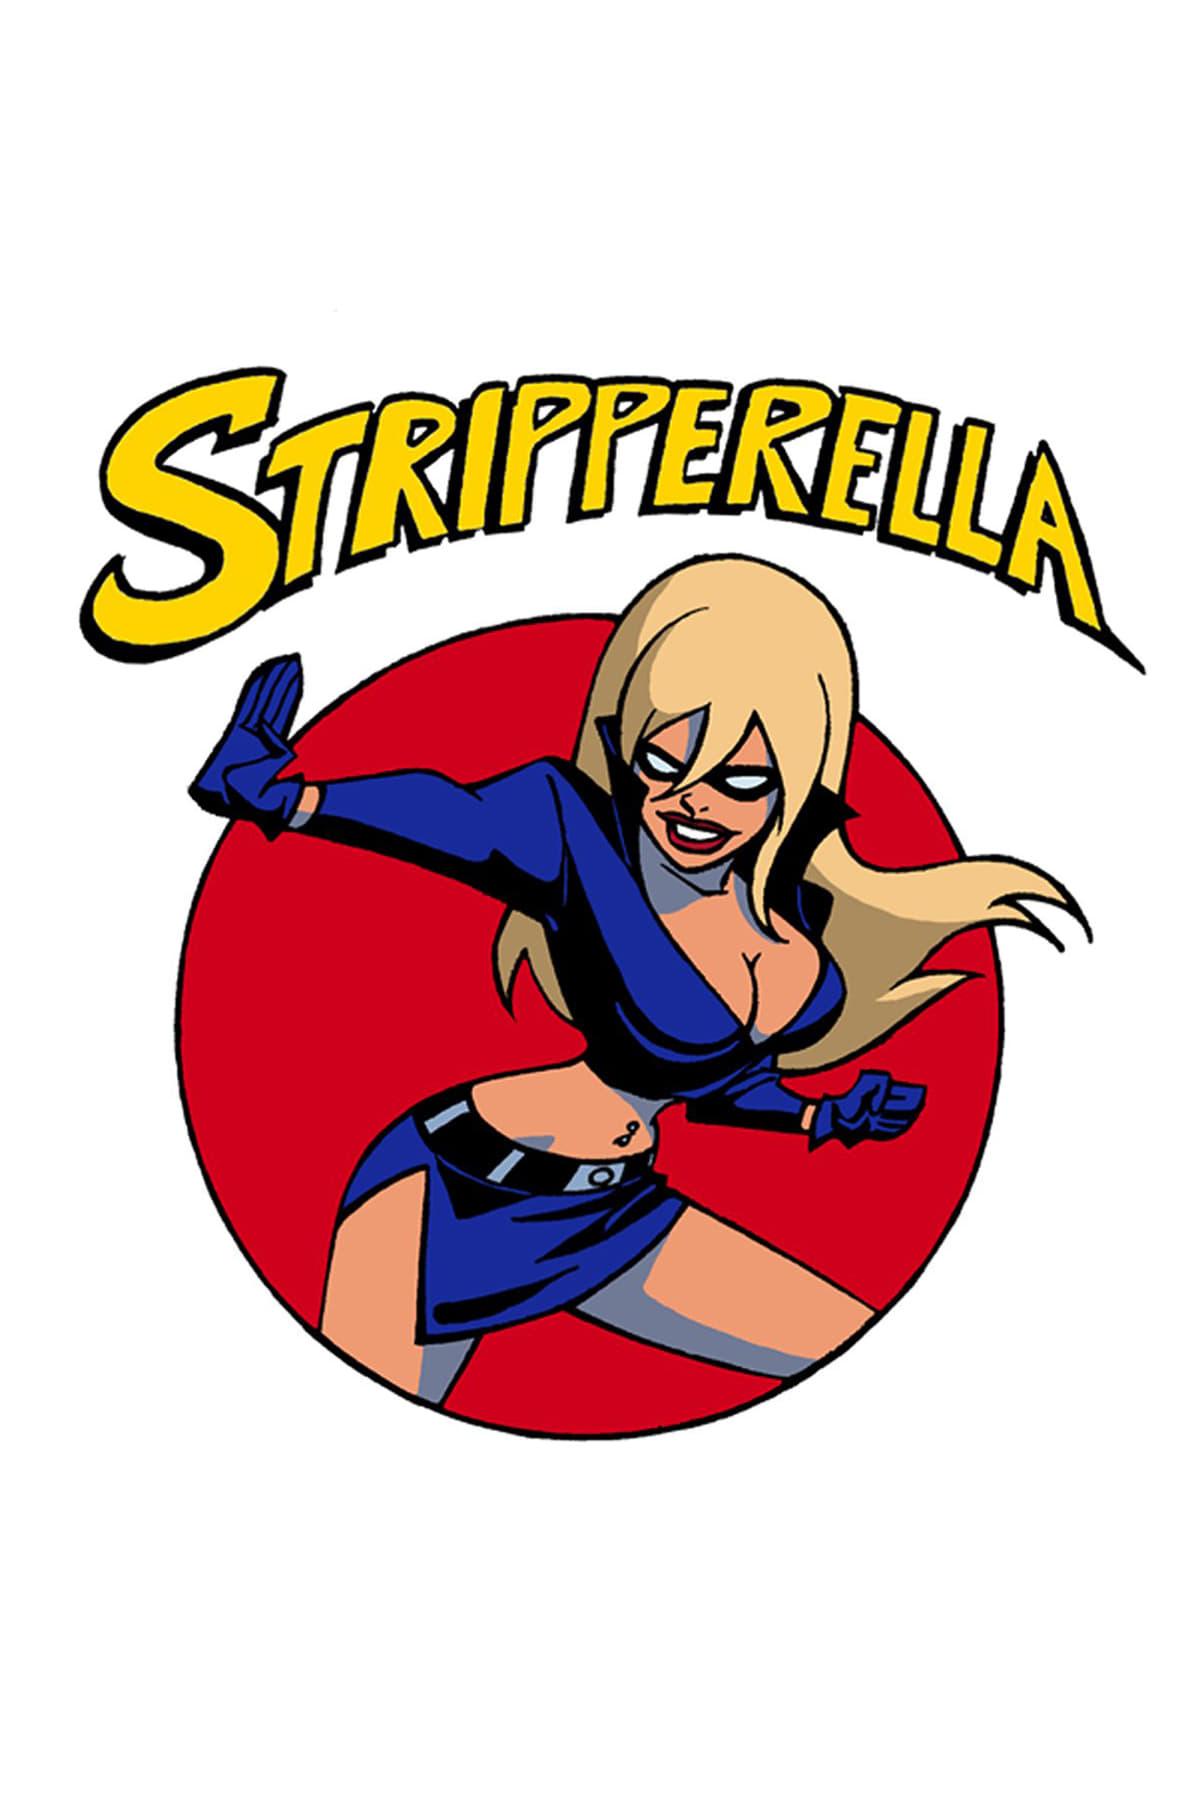 Stripperella poster